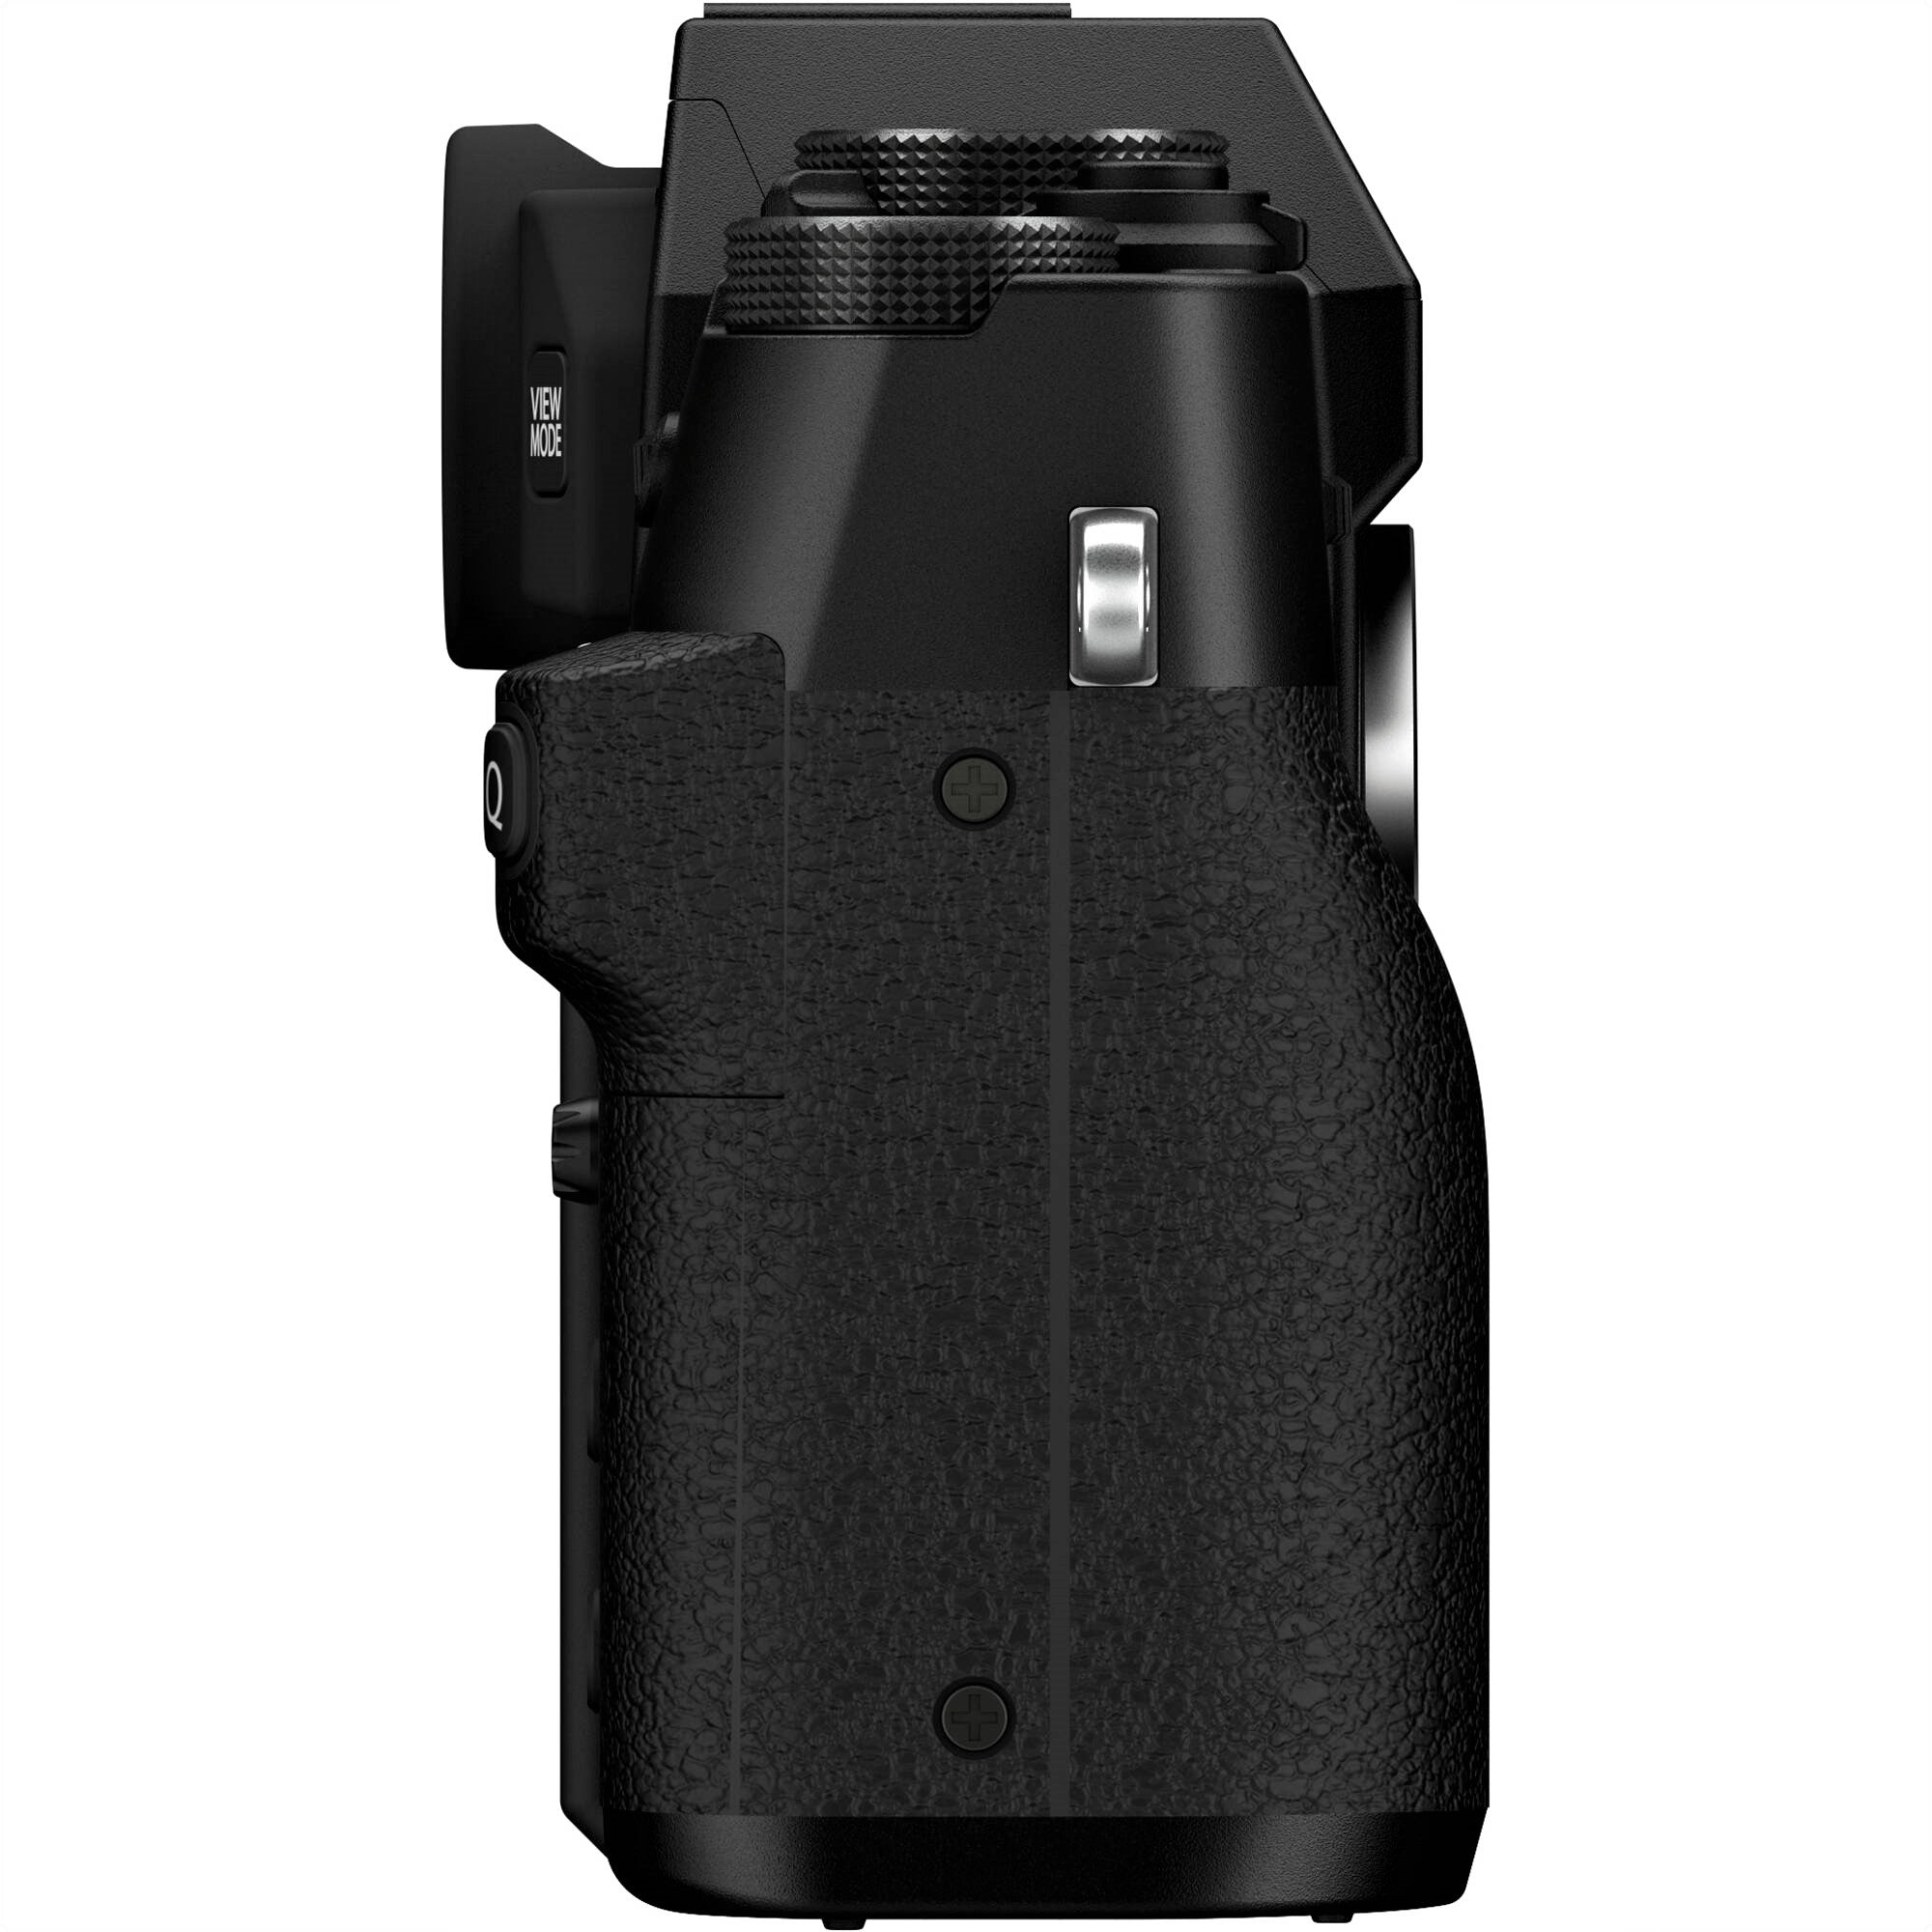 Fujifilm X-T30 II Mirrorless Camera with XC 15-45mm OIS PZ Lens (Black) - Side View